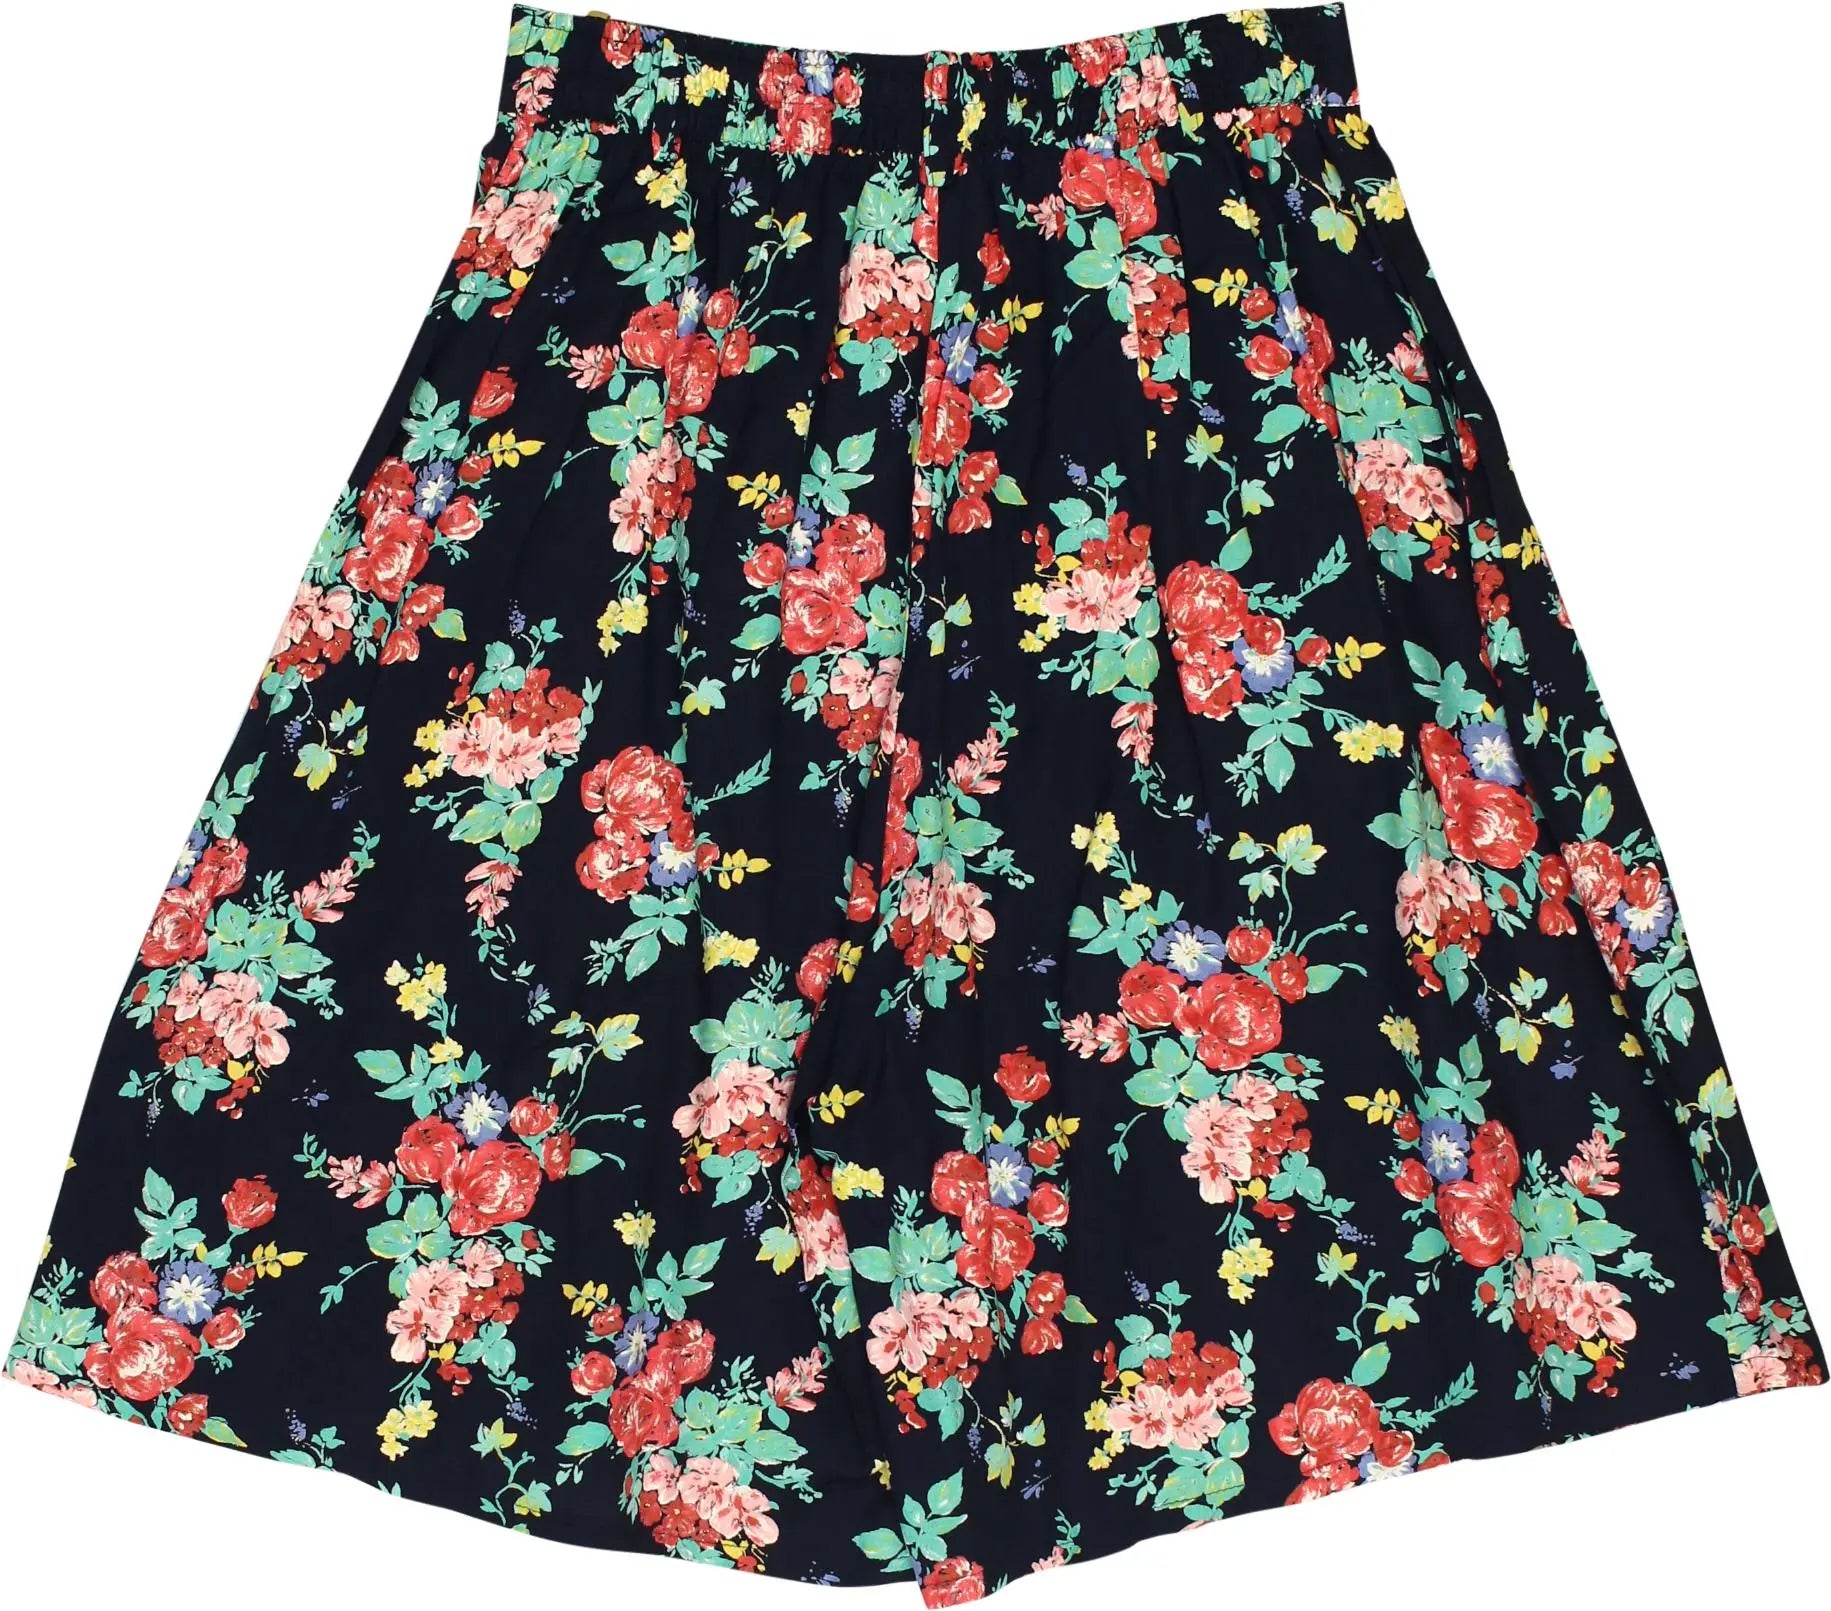 Miss Etam - Floral Shorts- ThriftTale.com - Vintage and second handclothing